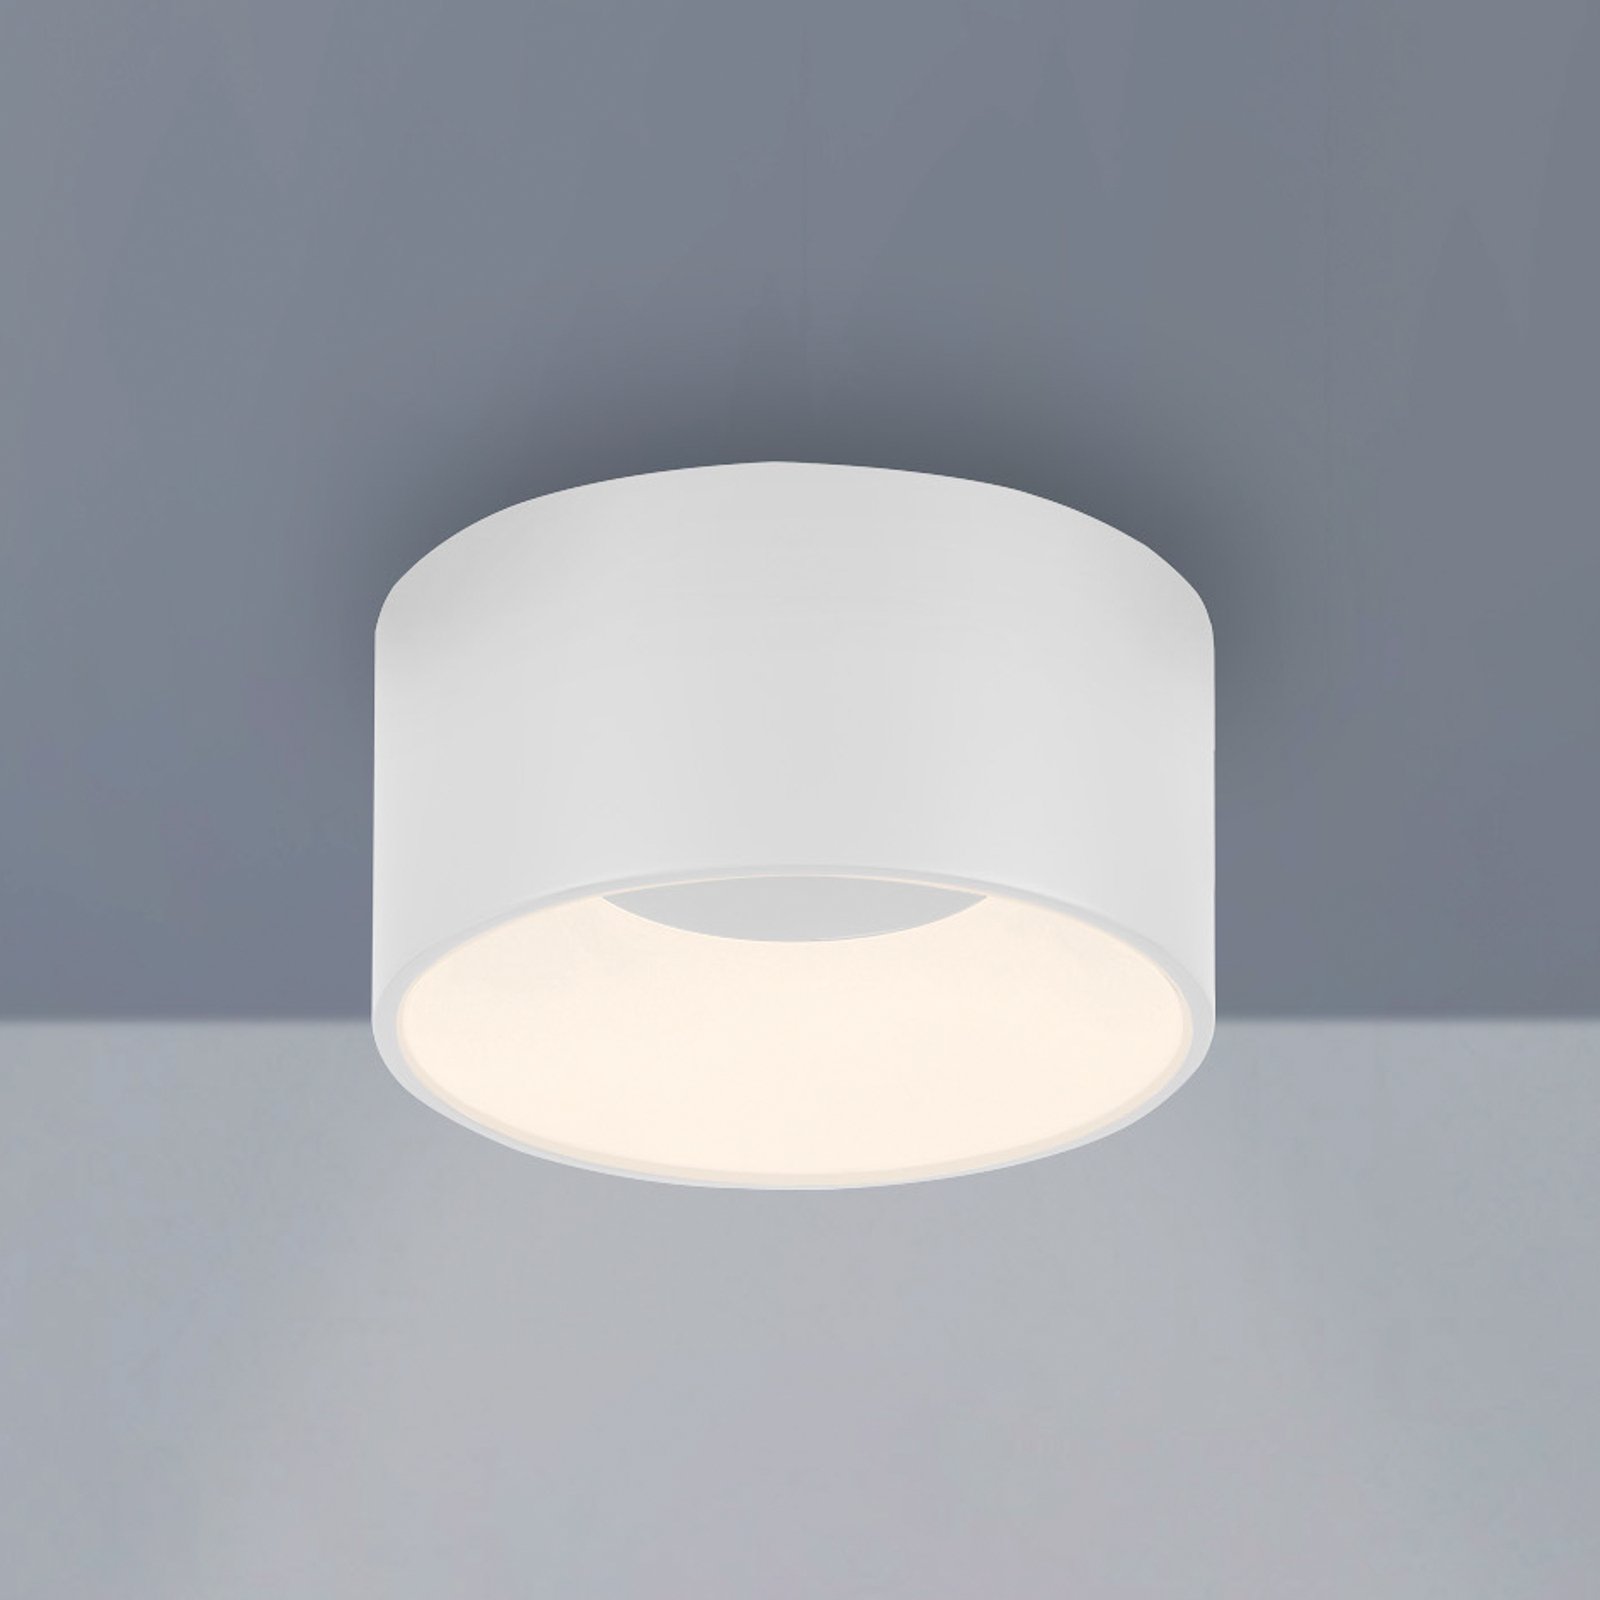 JUST LIGHT. Plafón LED Tanika, blanco, Ø 16 cm, atenuable